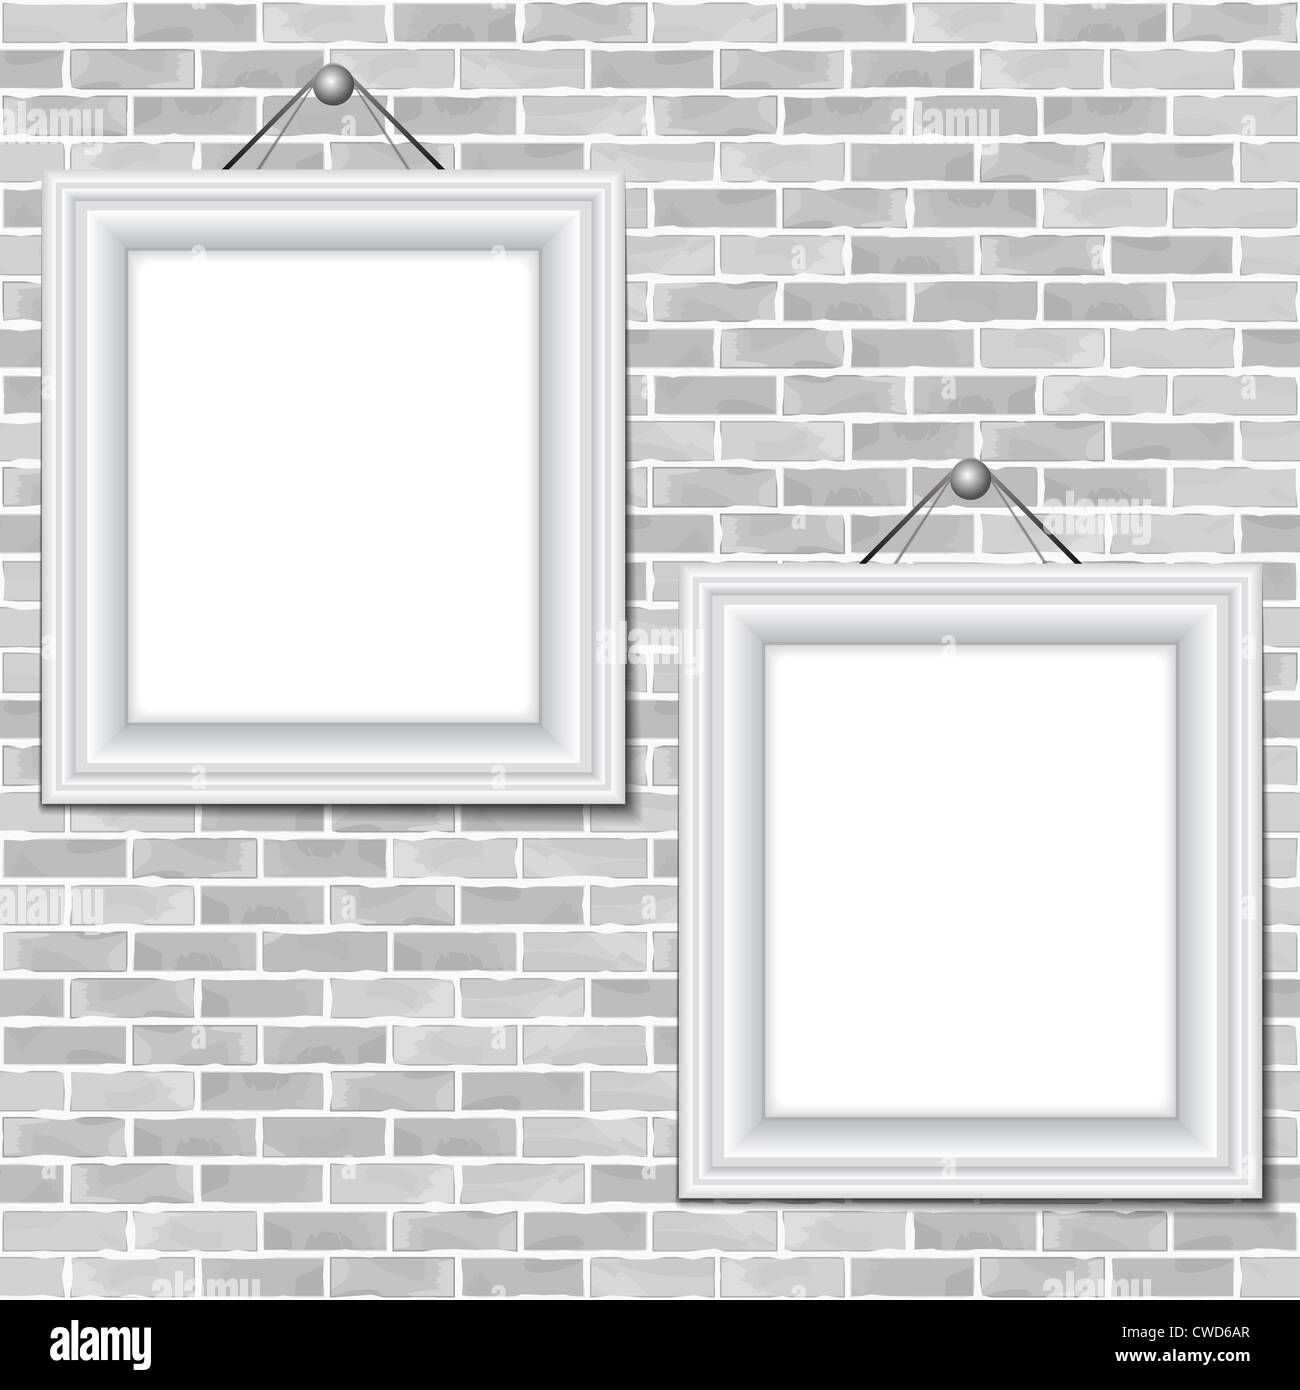 Frames on brick wall Stock Photo